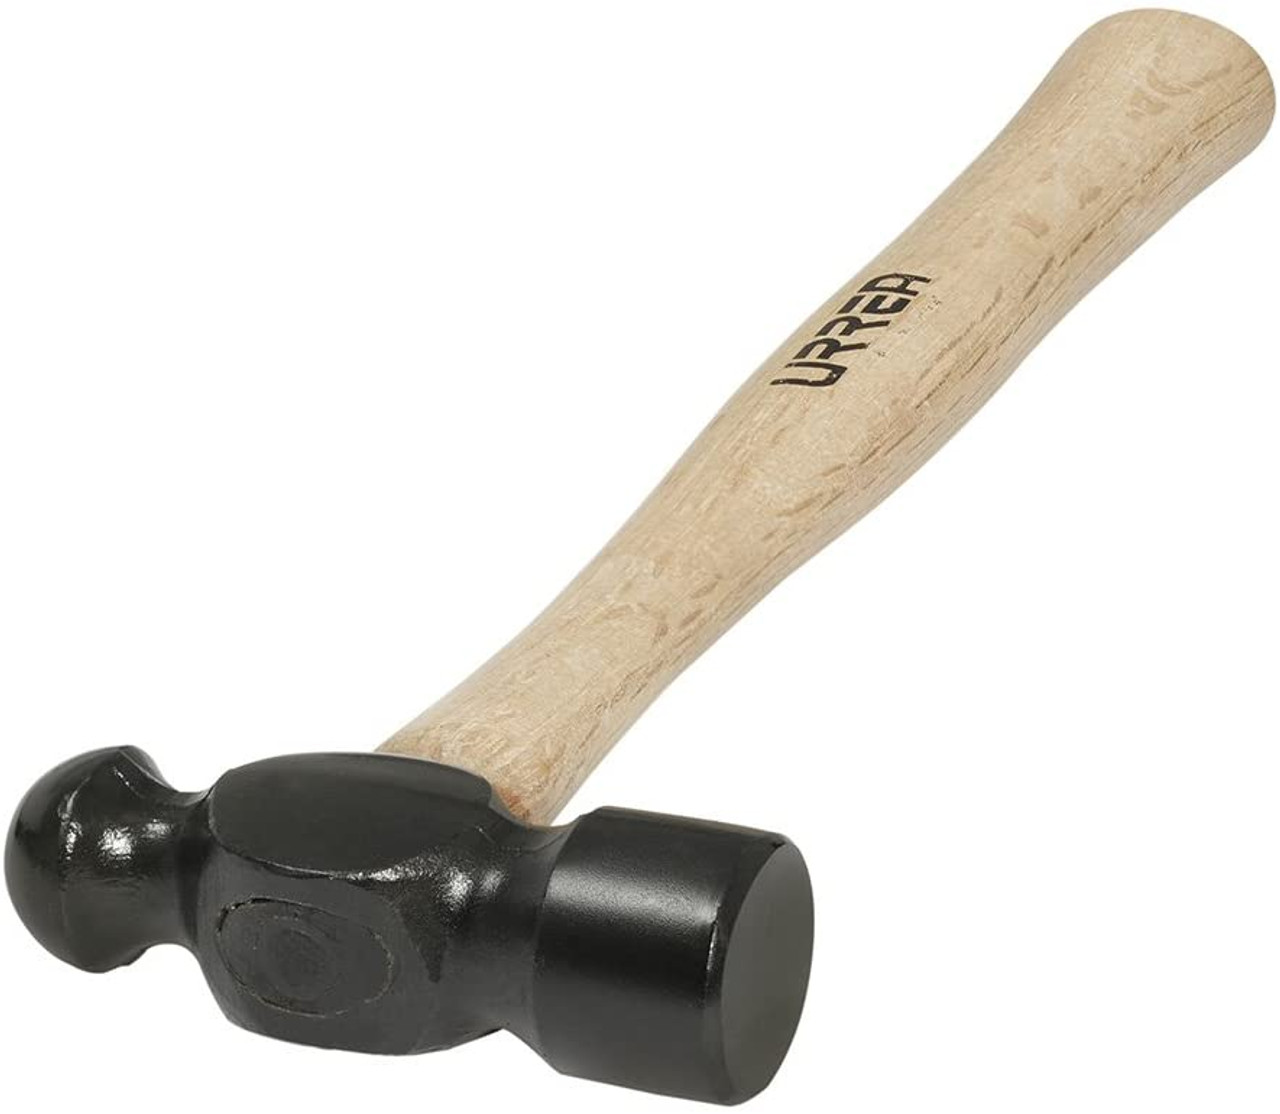 Machined Black Head Ball Pein Hammers With 12-3/8" Oak Handle